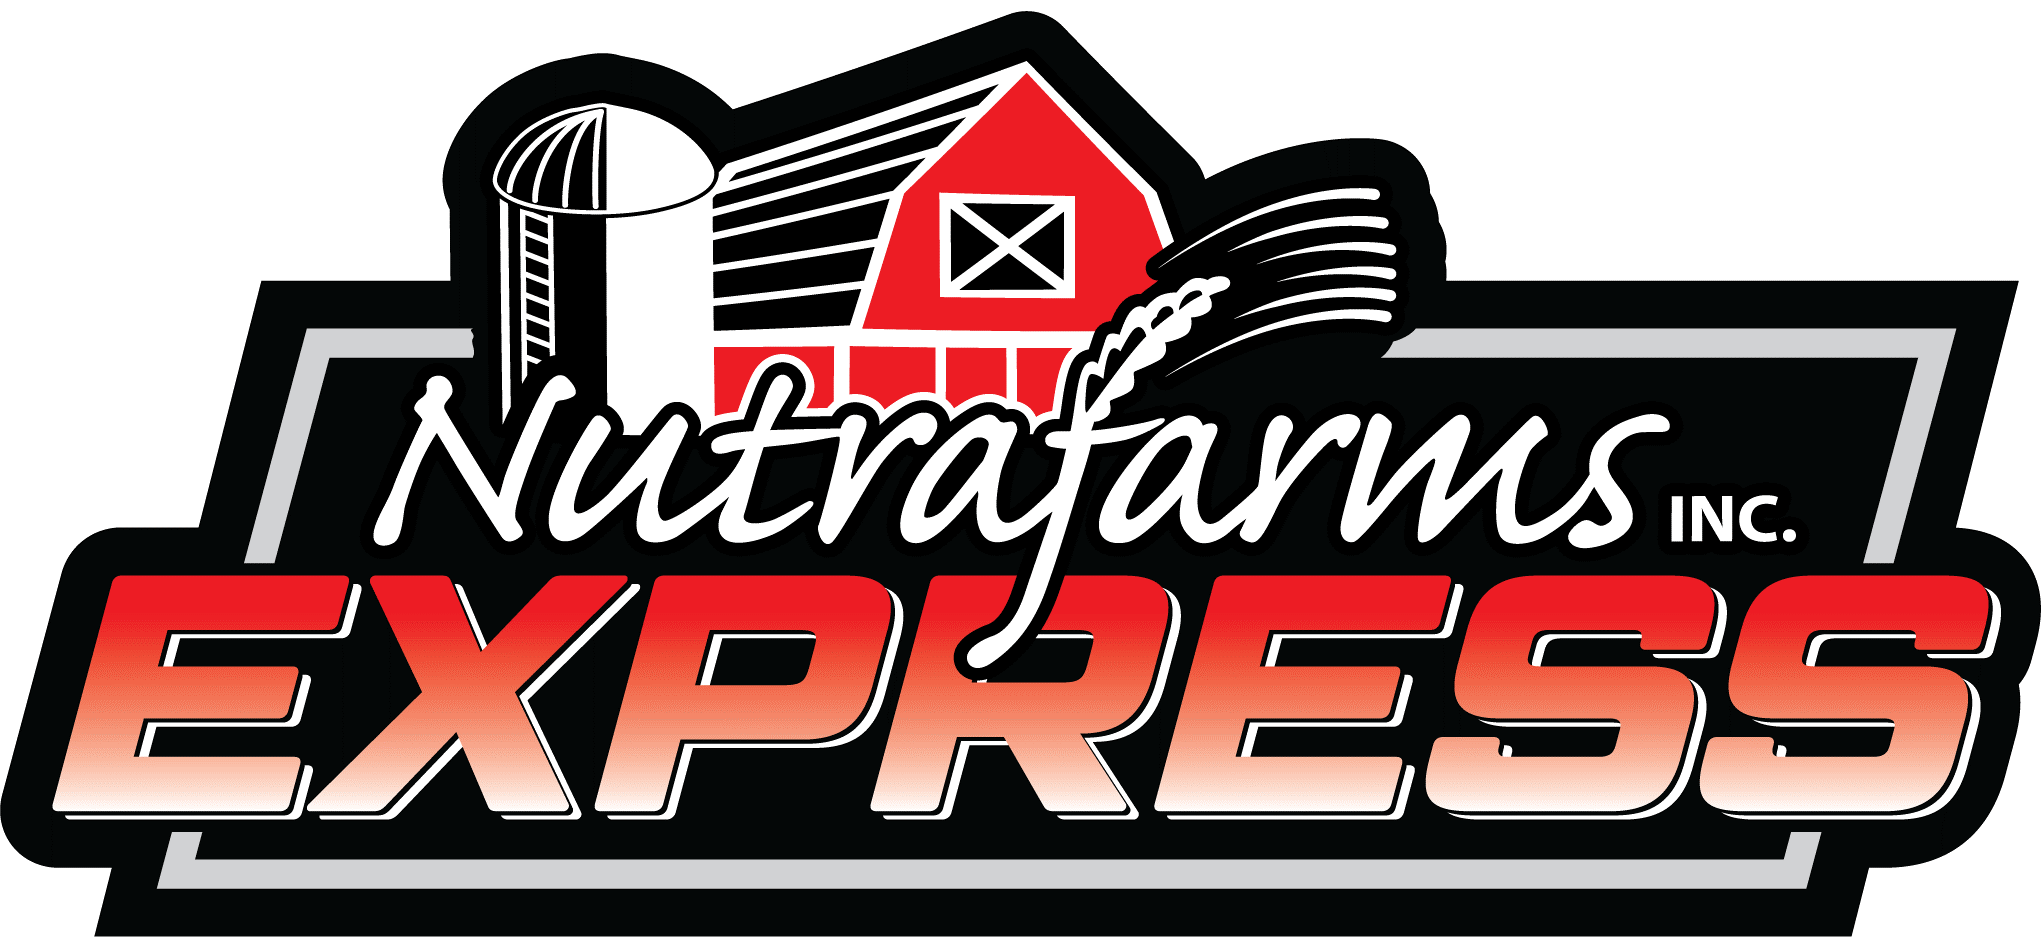 Nutrafarms Express